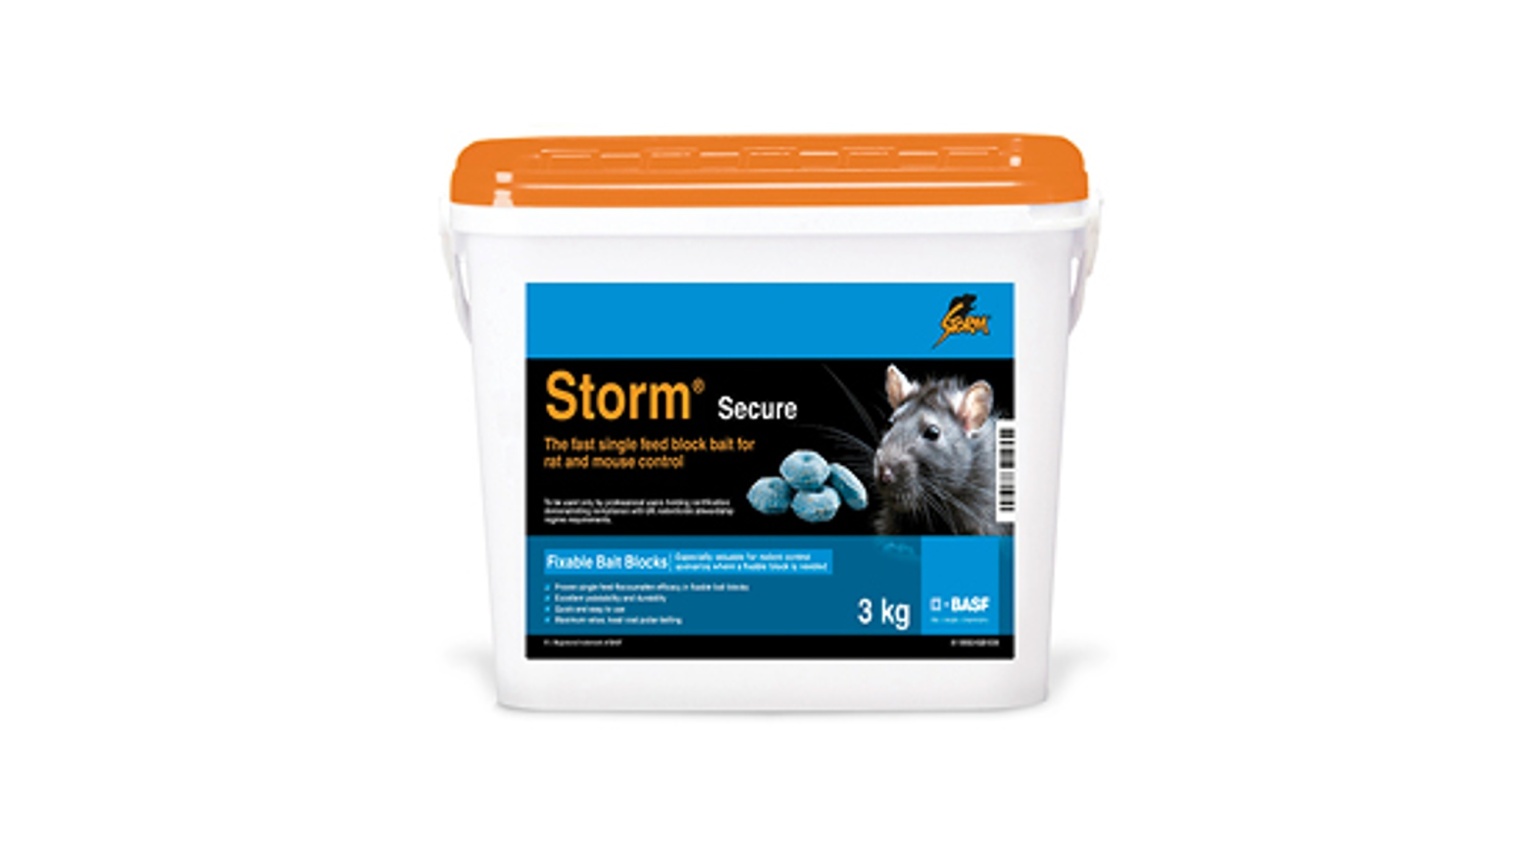 Storm® Secure - BASF Pest Control Solutions UK